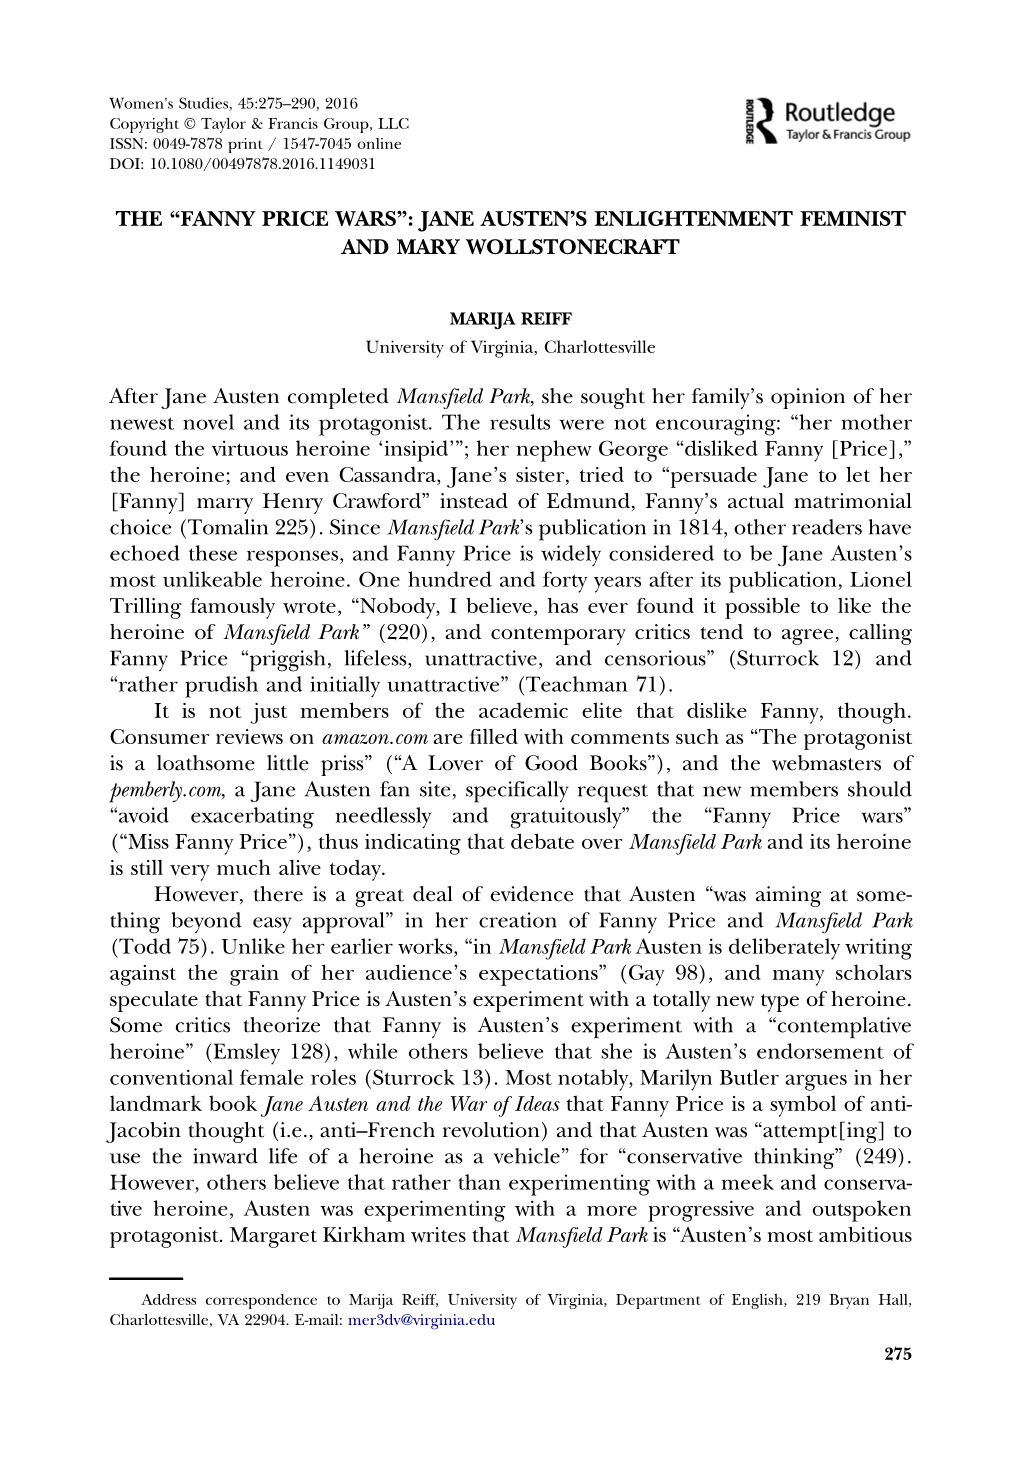 Fanny Price Wars”: Jane Austen’S Enlightenment Feminist and Mary Wollstonecraft